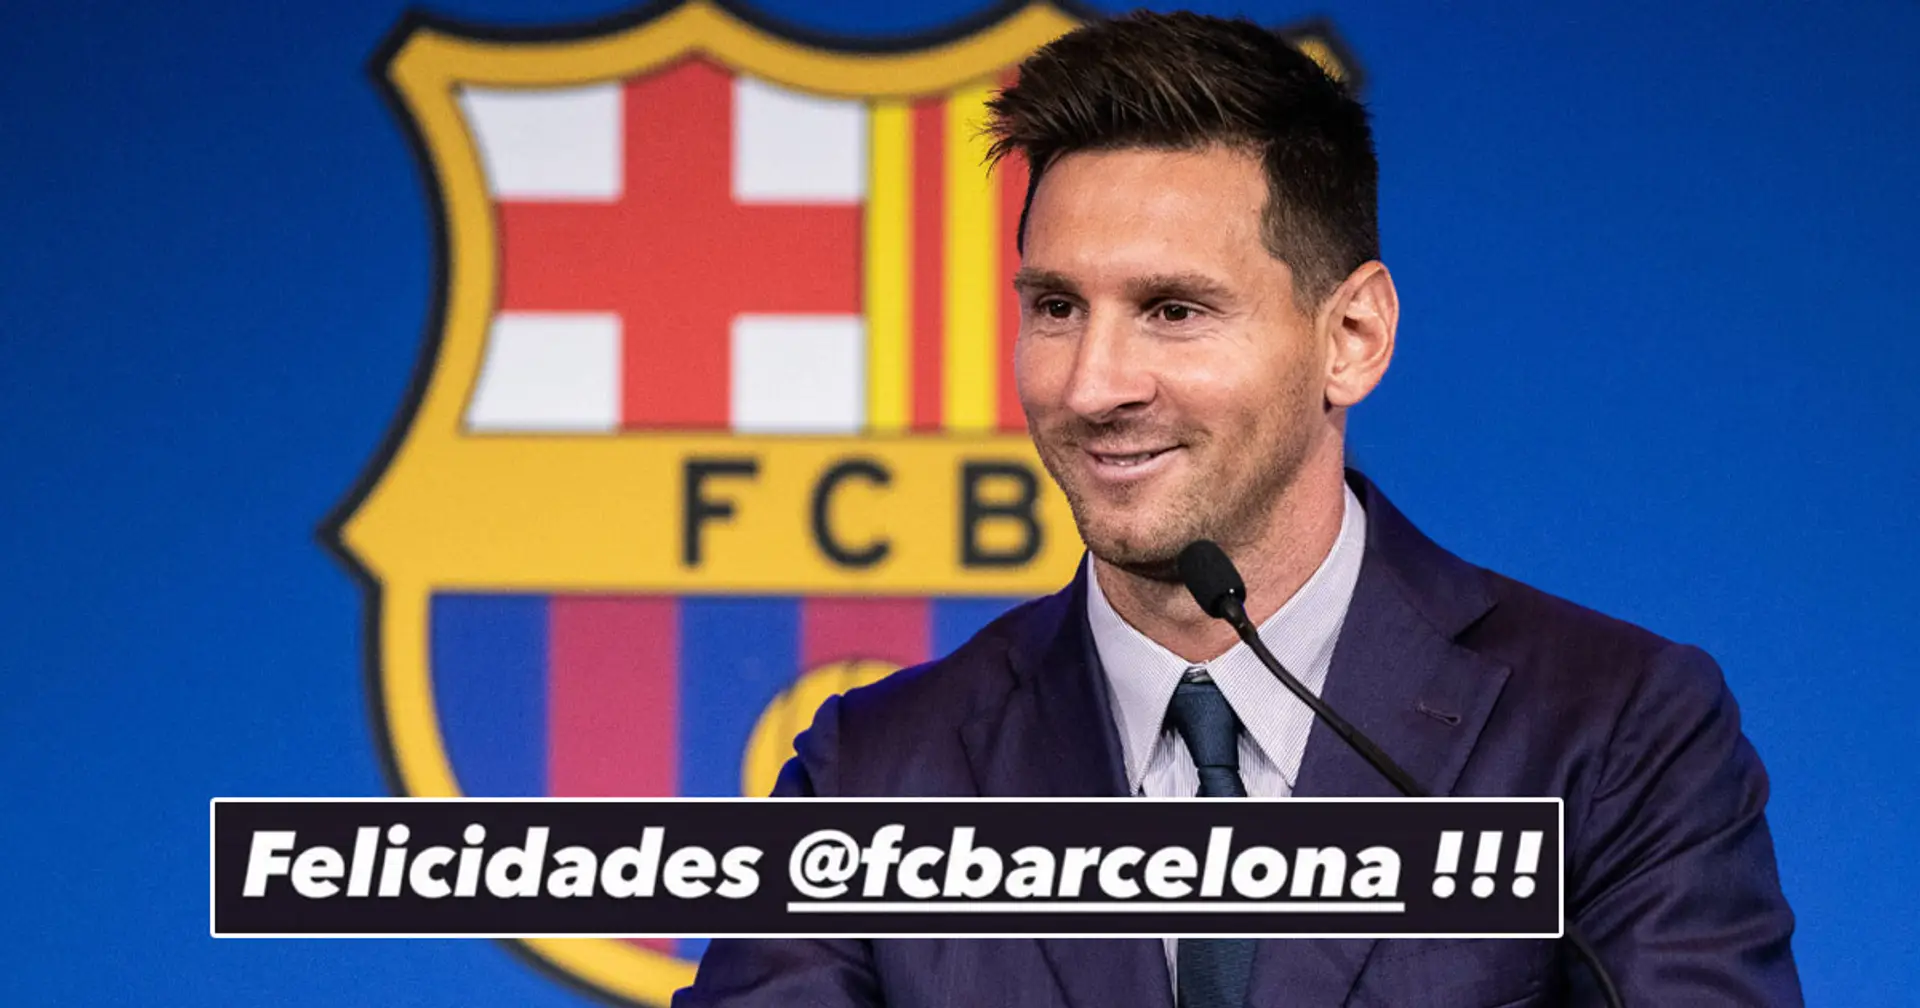 Truly cule: Messi congratulates Barca on their birthday